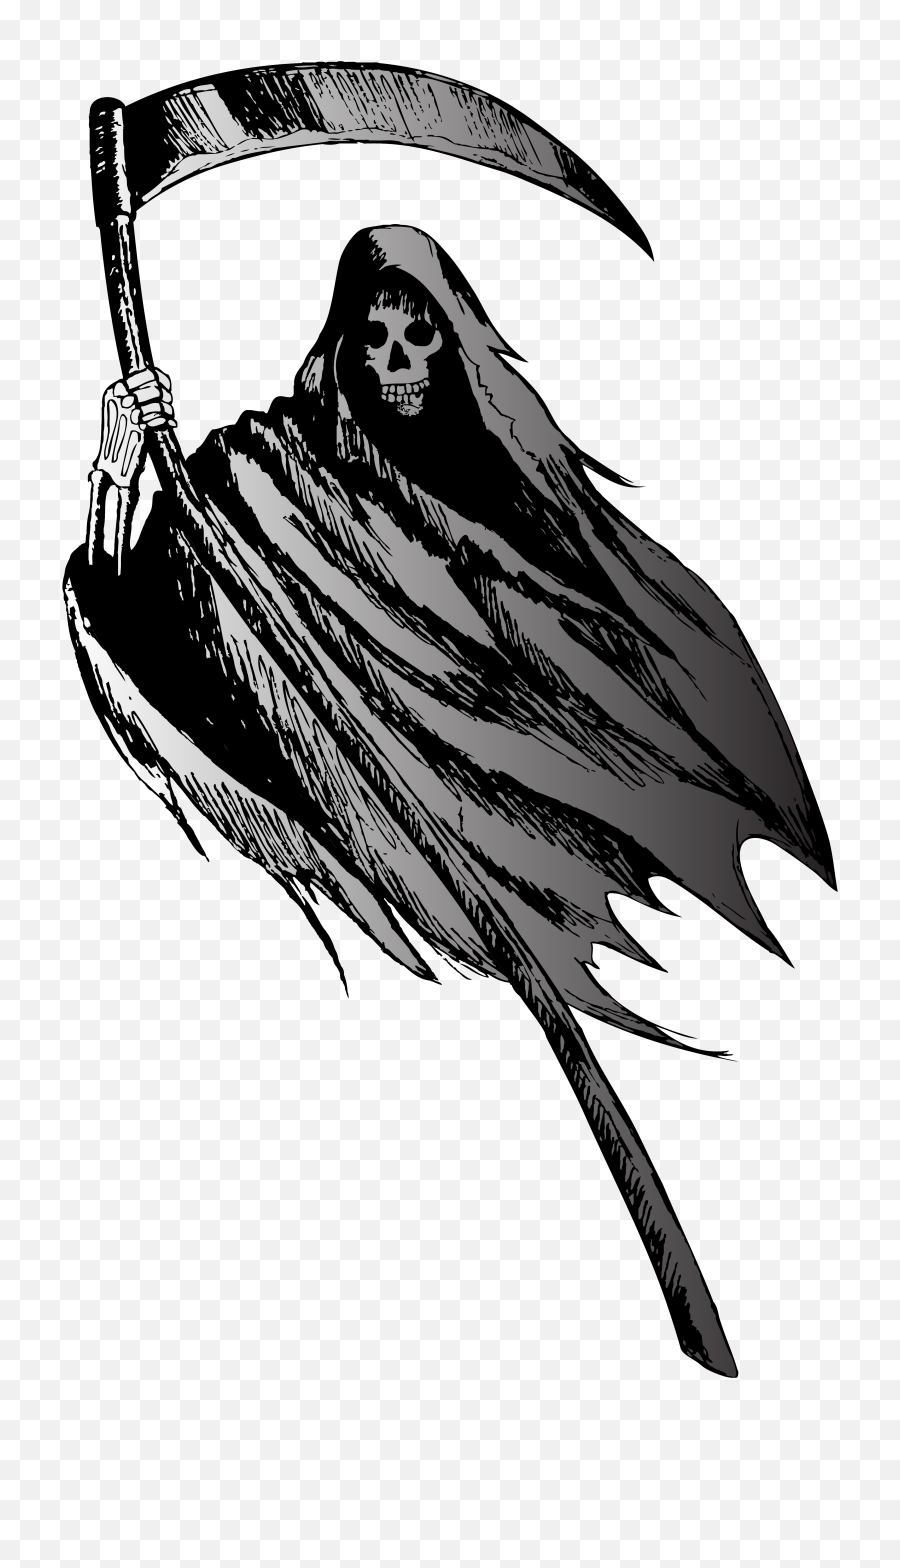 Download Free Png Grim Reaper - Drawing The Grim Reaper,Grim Reaper Png